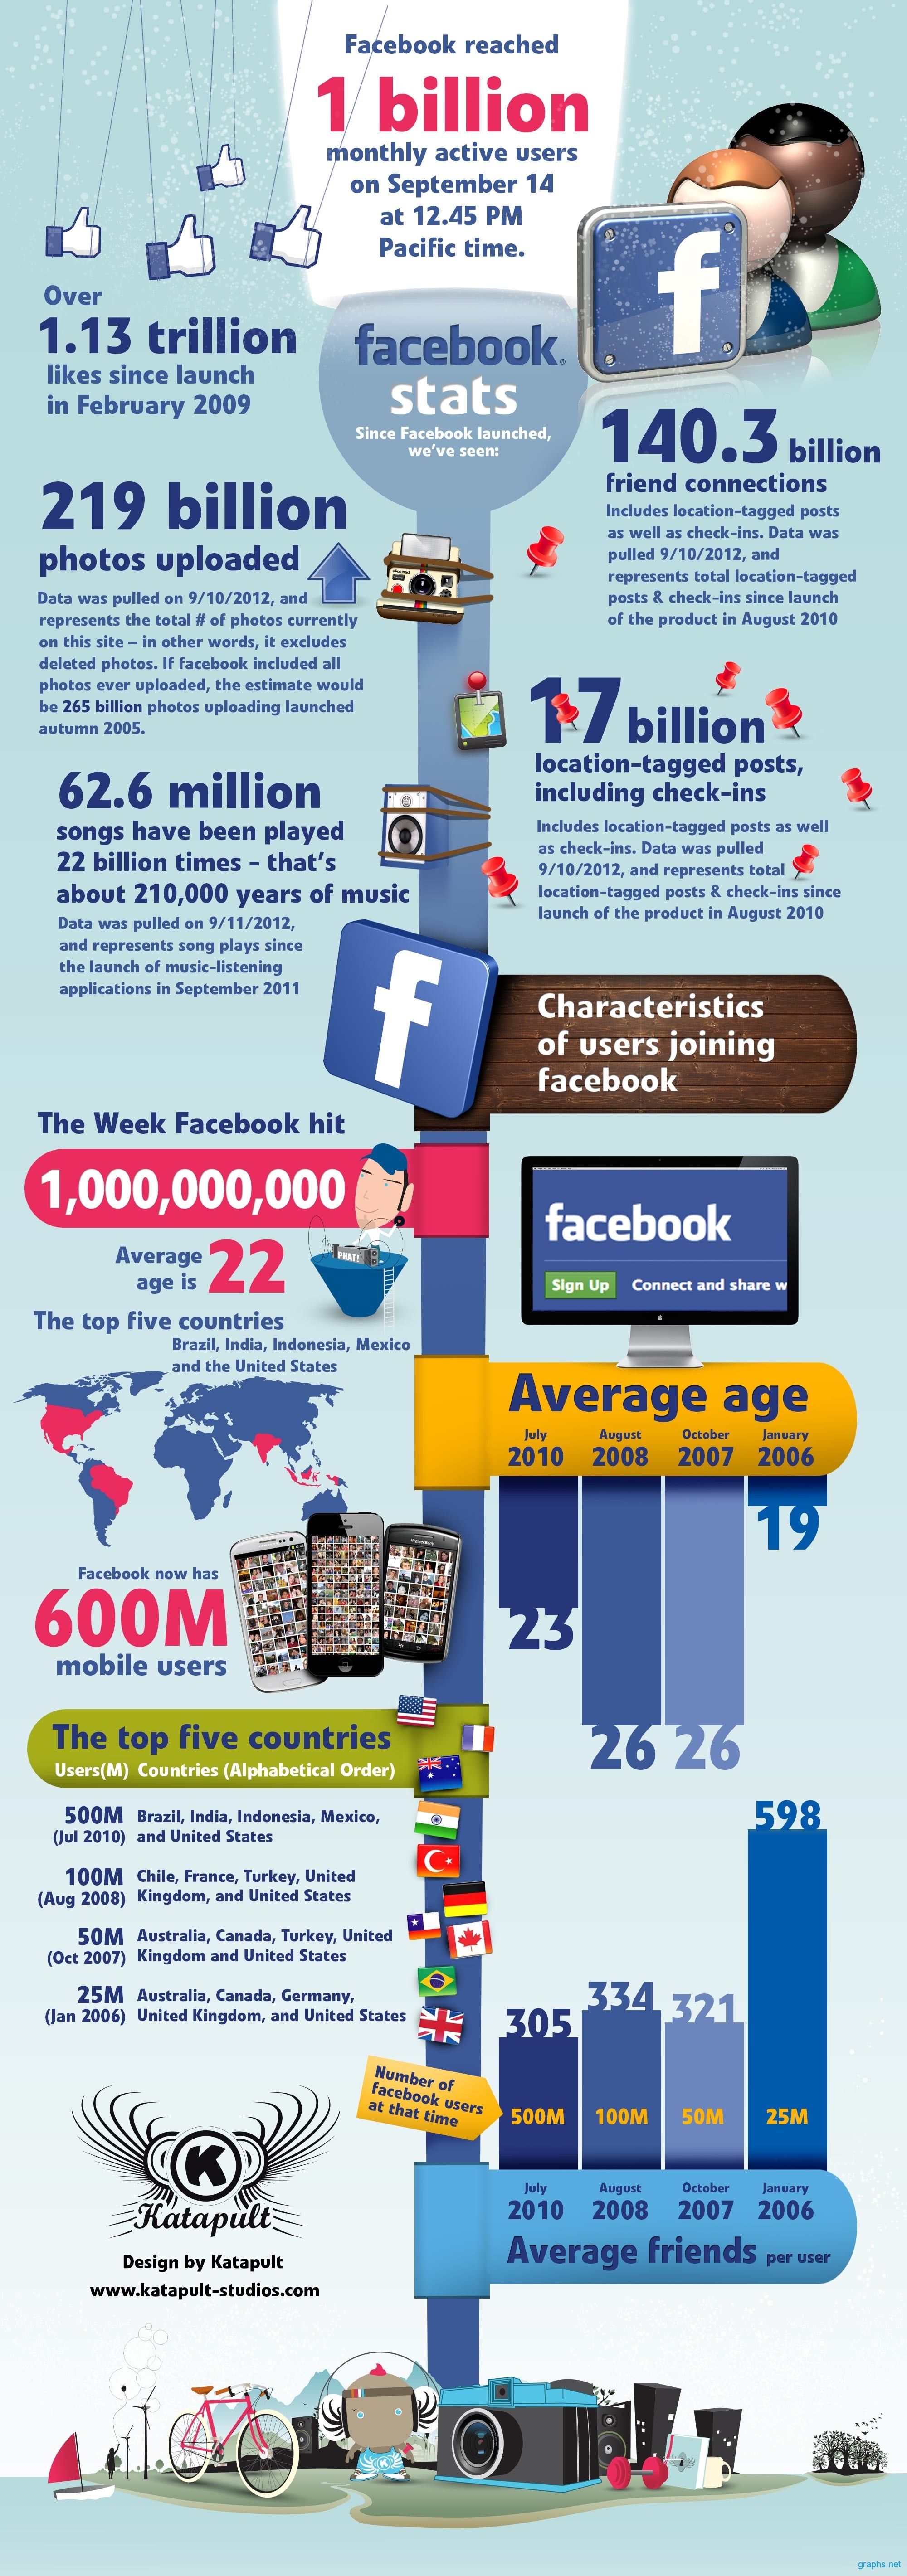 Facebook Reaches 1 Billion